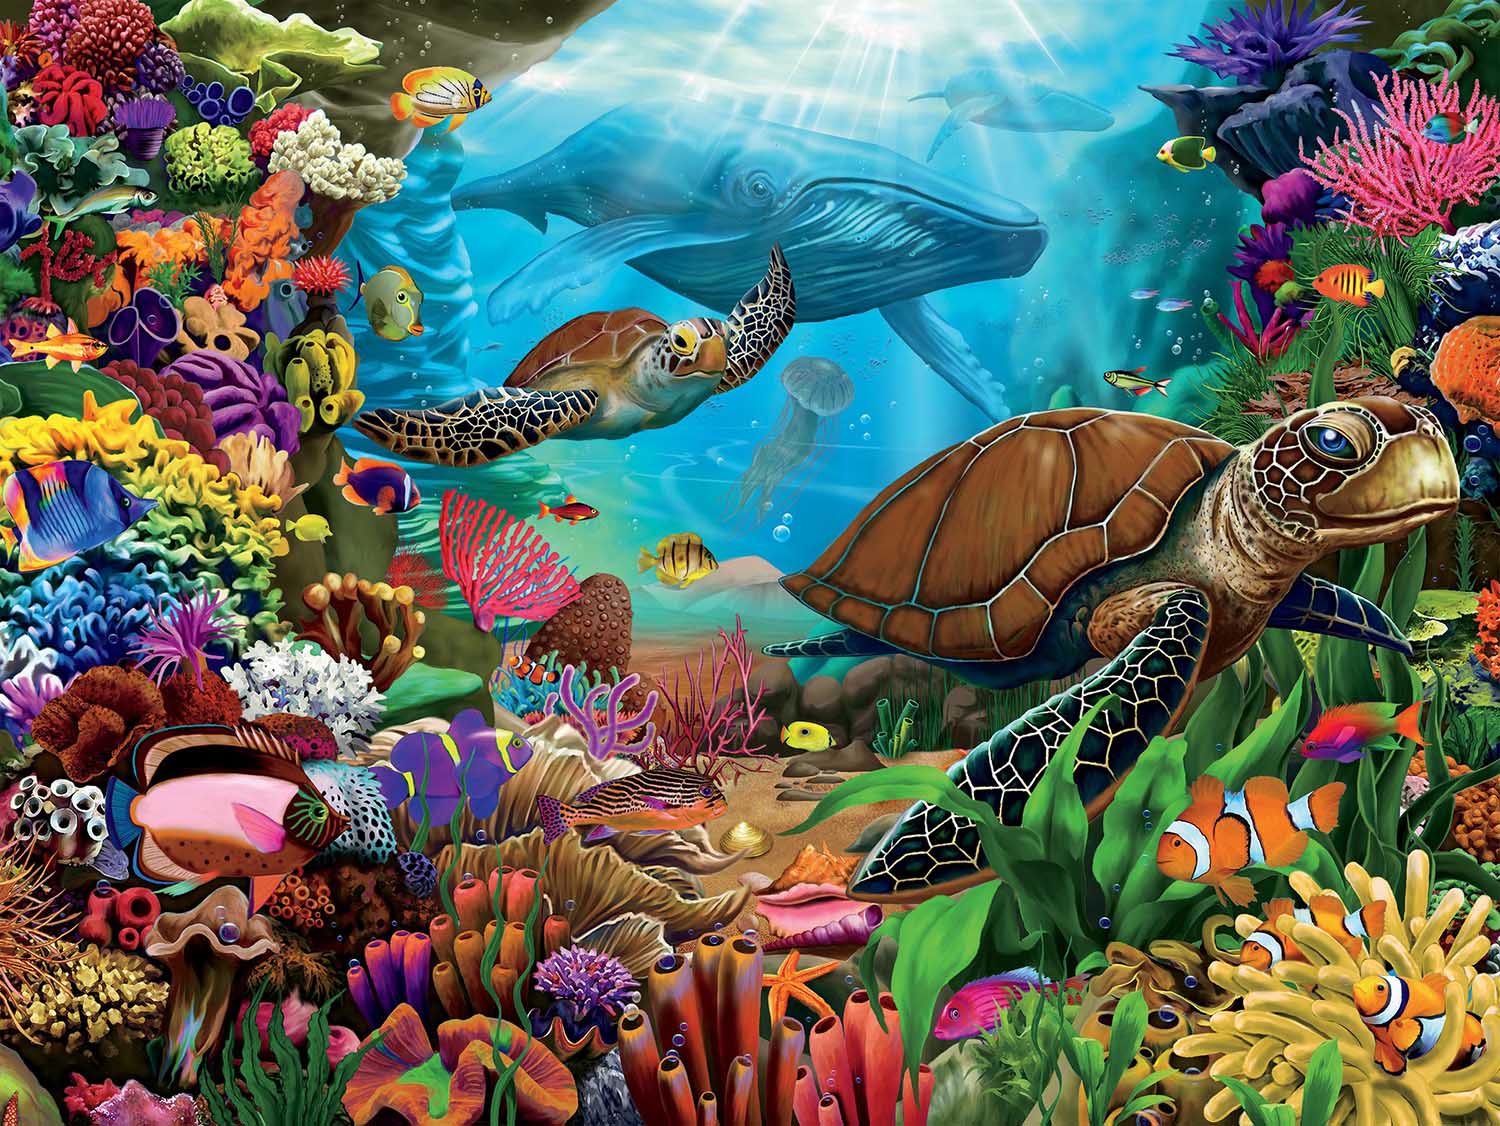 Clementoni Underwater 6000 Piece Oceancape Jigsaw Puzzle Sea Turtle Dolphins